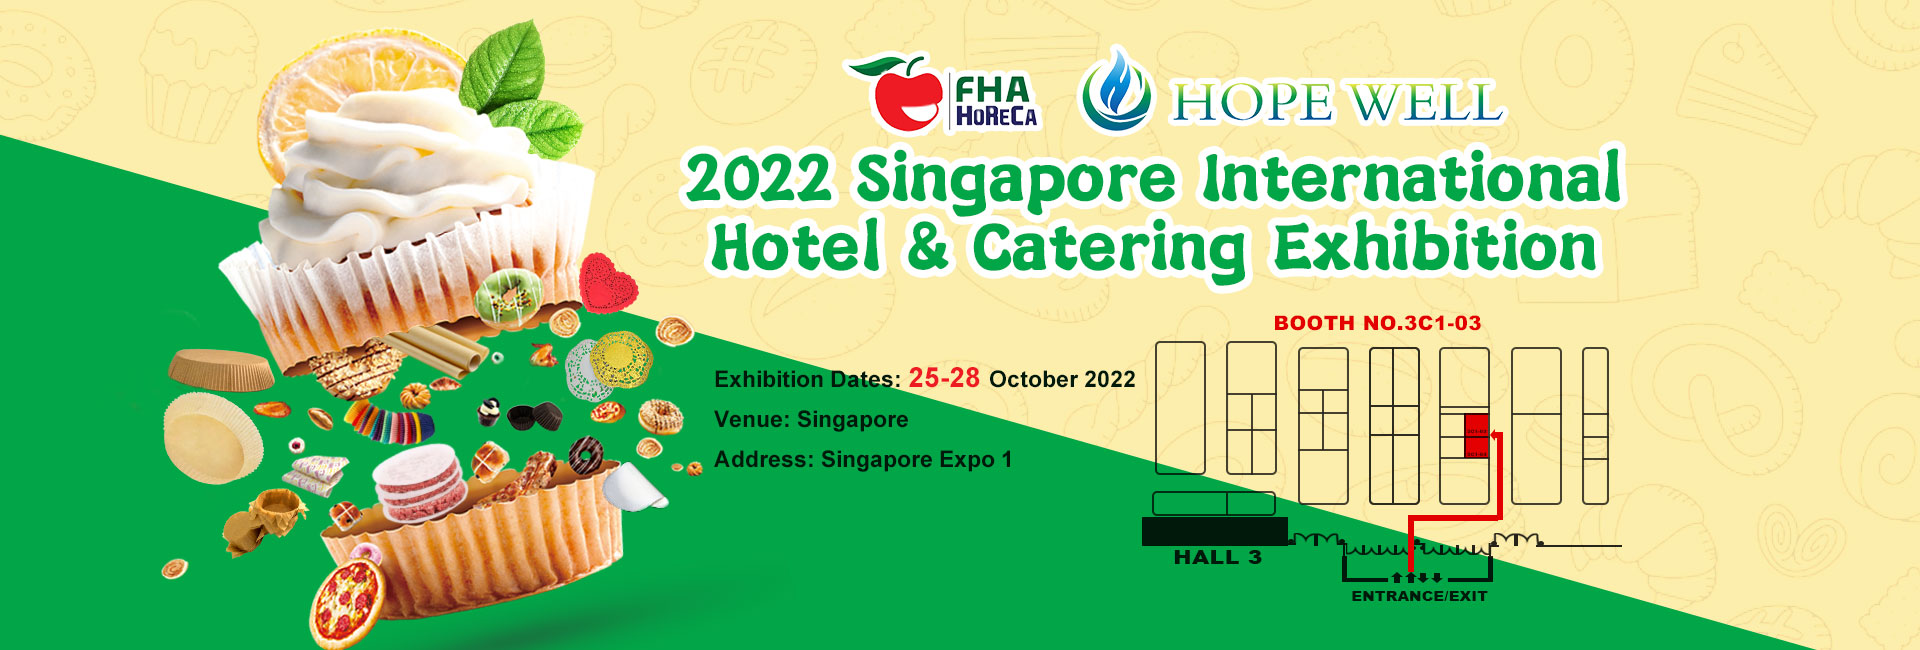 2022 Singapore International Hotel & Catering Exhibition